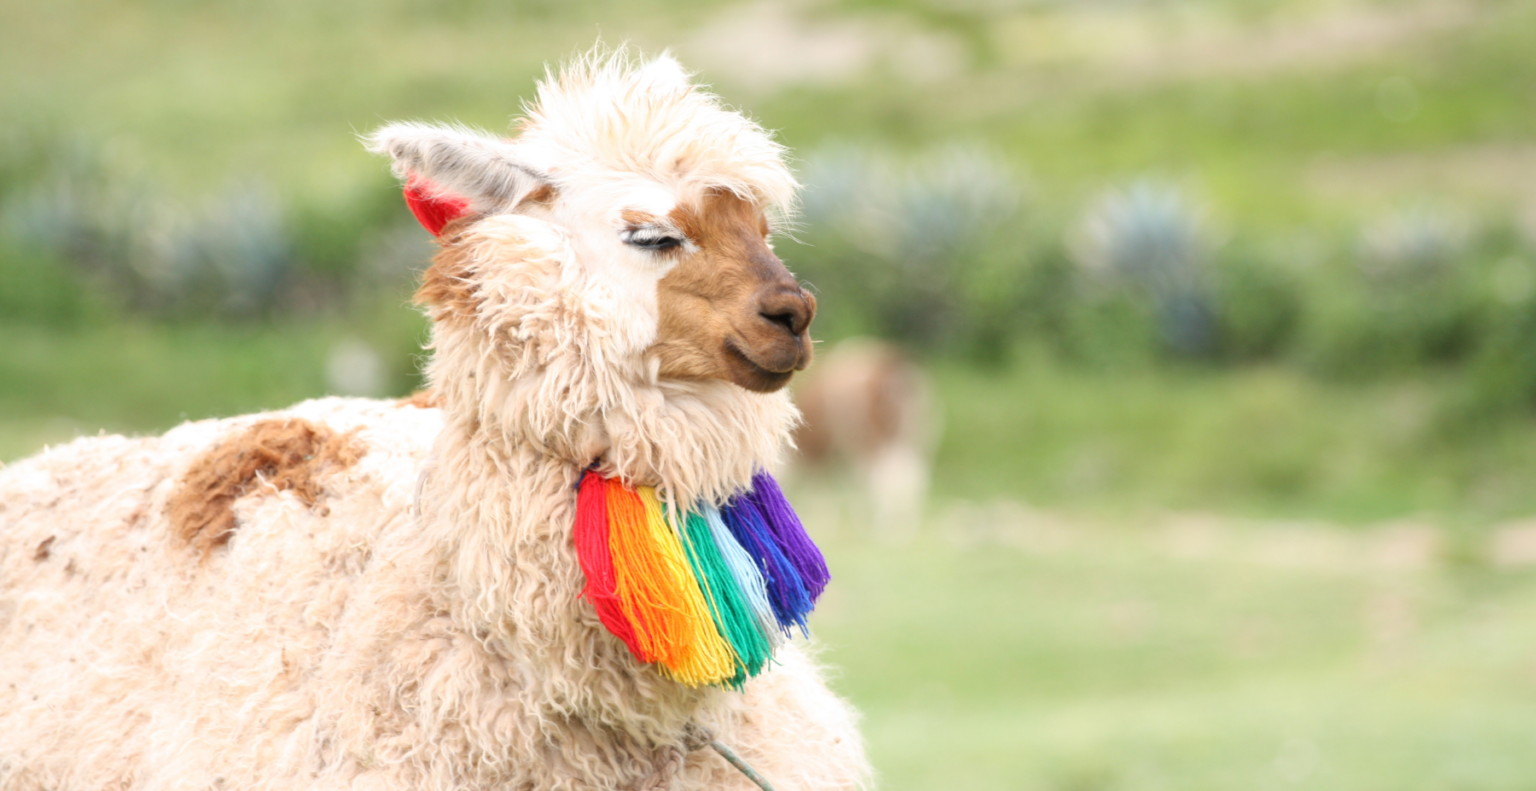 Llama with rainbow collar sitting on grass